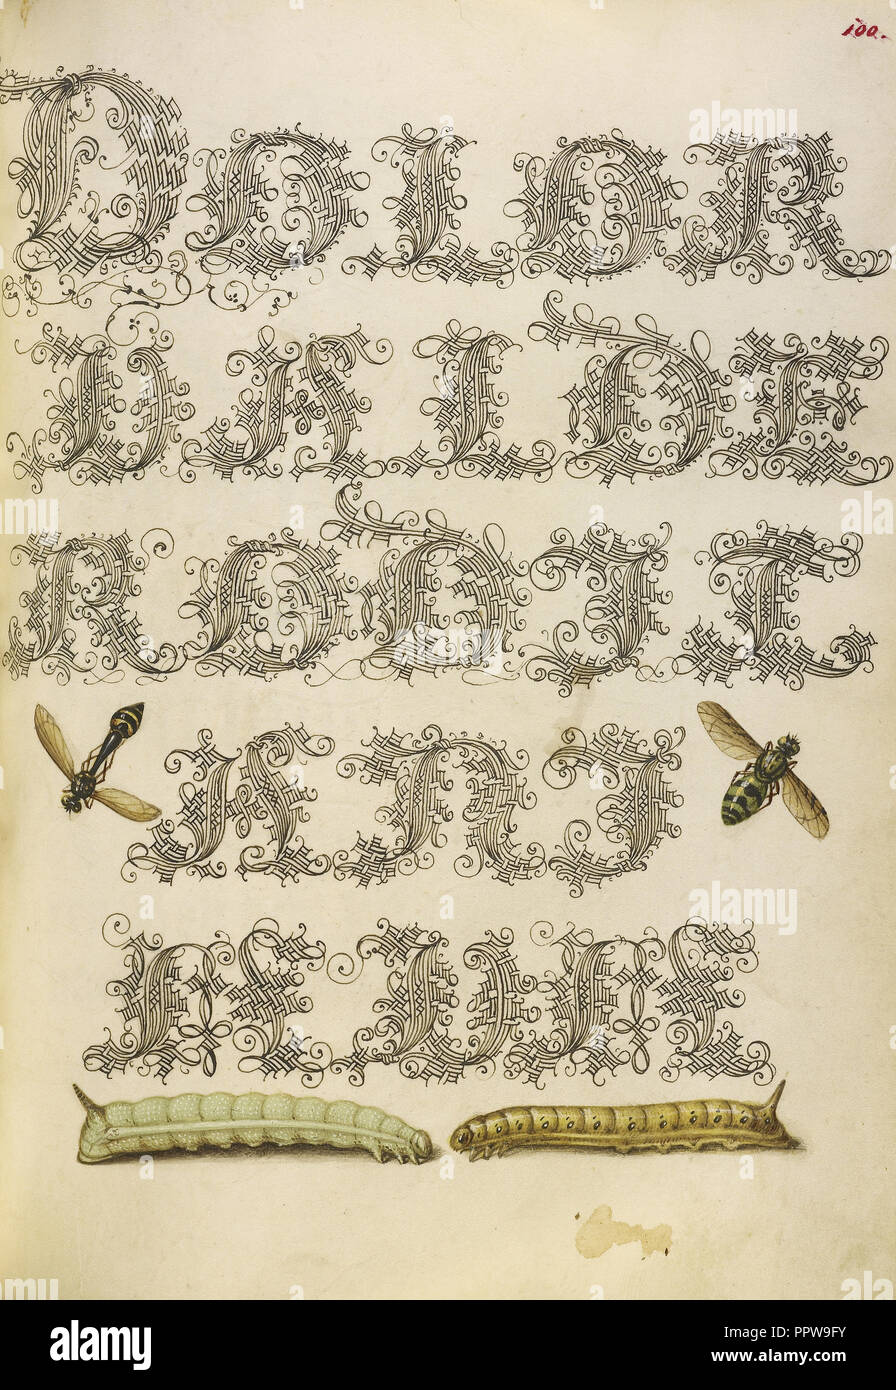 Potter Wasp, Hover Fly, and Caterpillars; Joris Hoefnagel, Flemish , Hungarian, 1542 - 1600, and Georg Bocskay, Hungarian Stock Photo